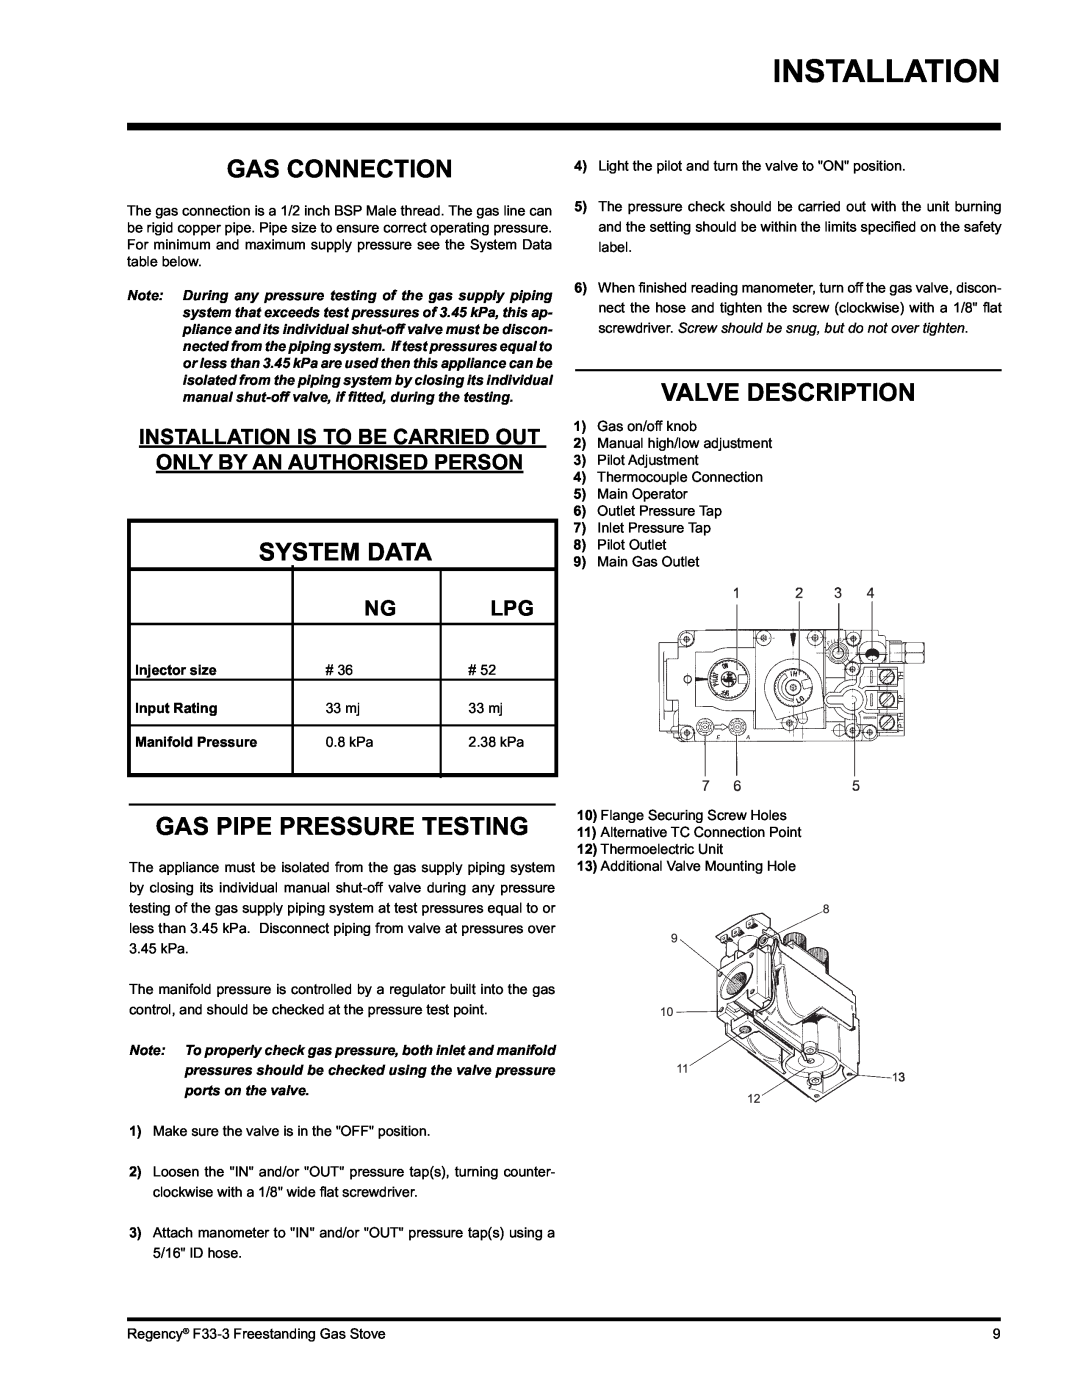 Regency Wraps F33 Gas Connection, System Data, Valve Description, Gas Pipe Pressure Testing, Installation 